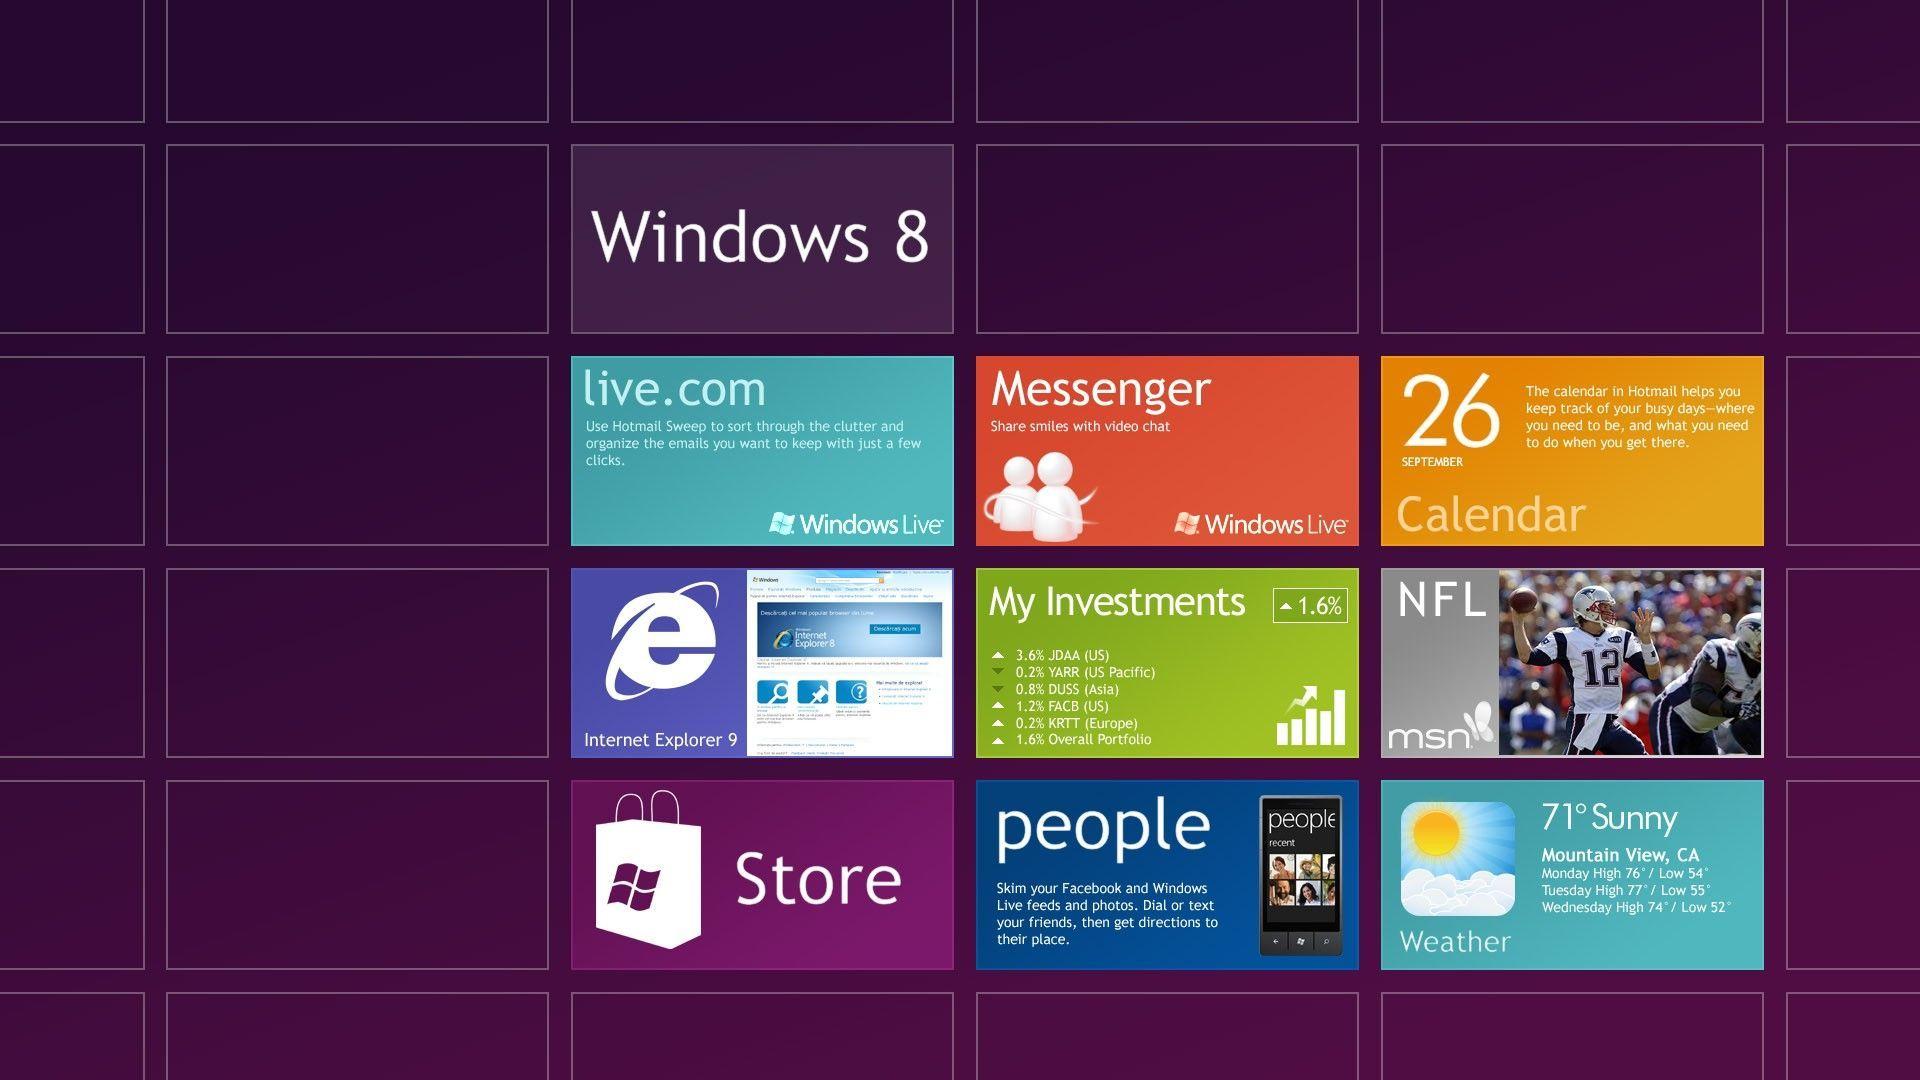 Download Windows 8 Wallpaper 1920x1080